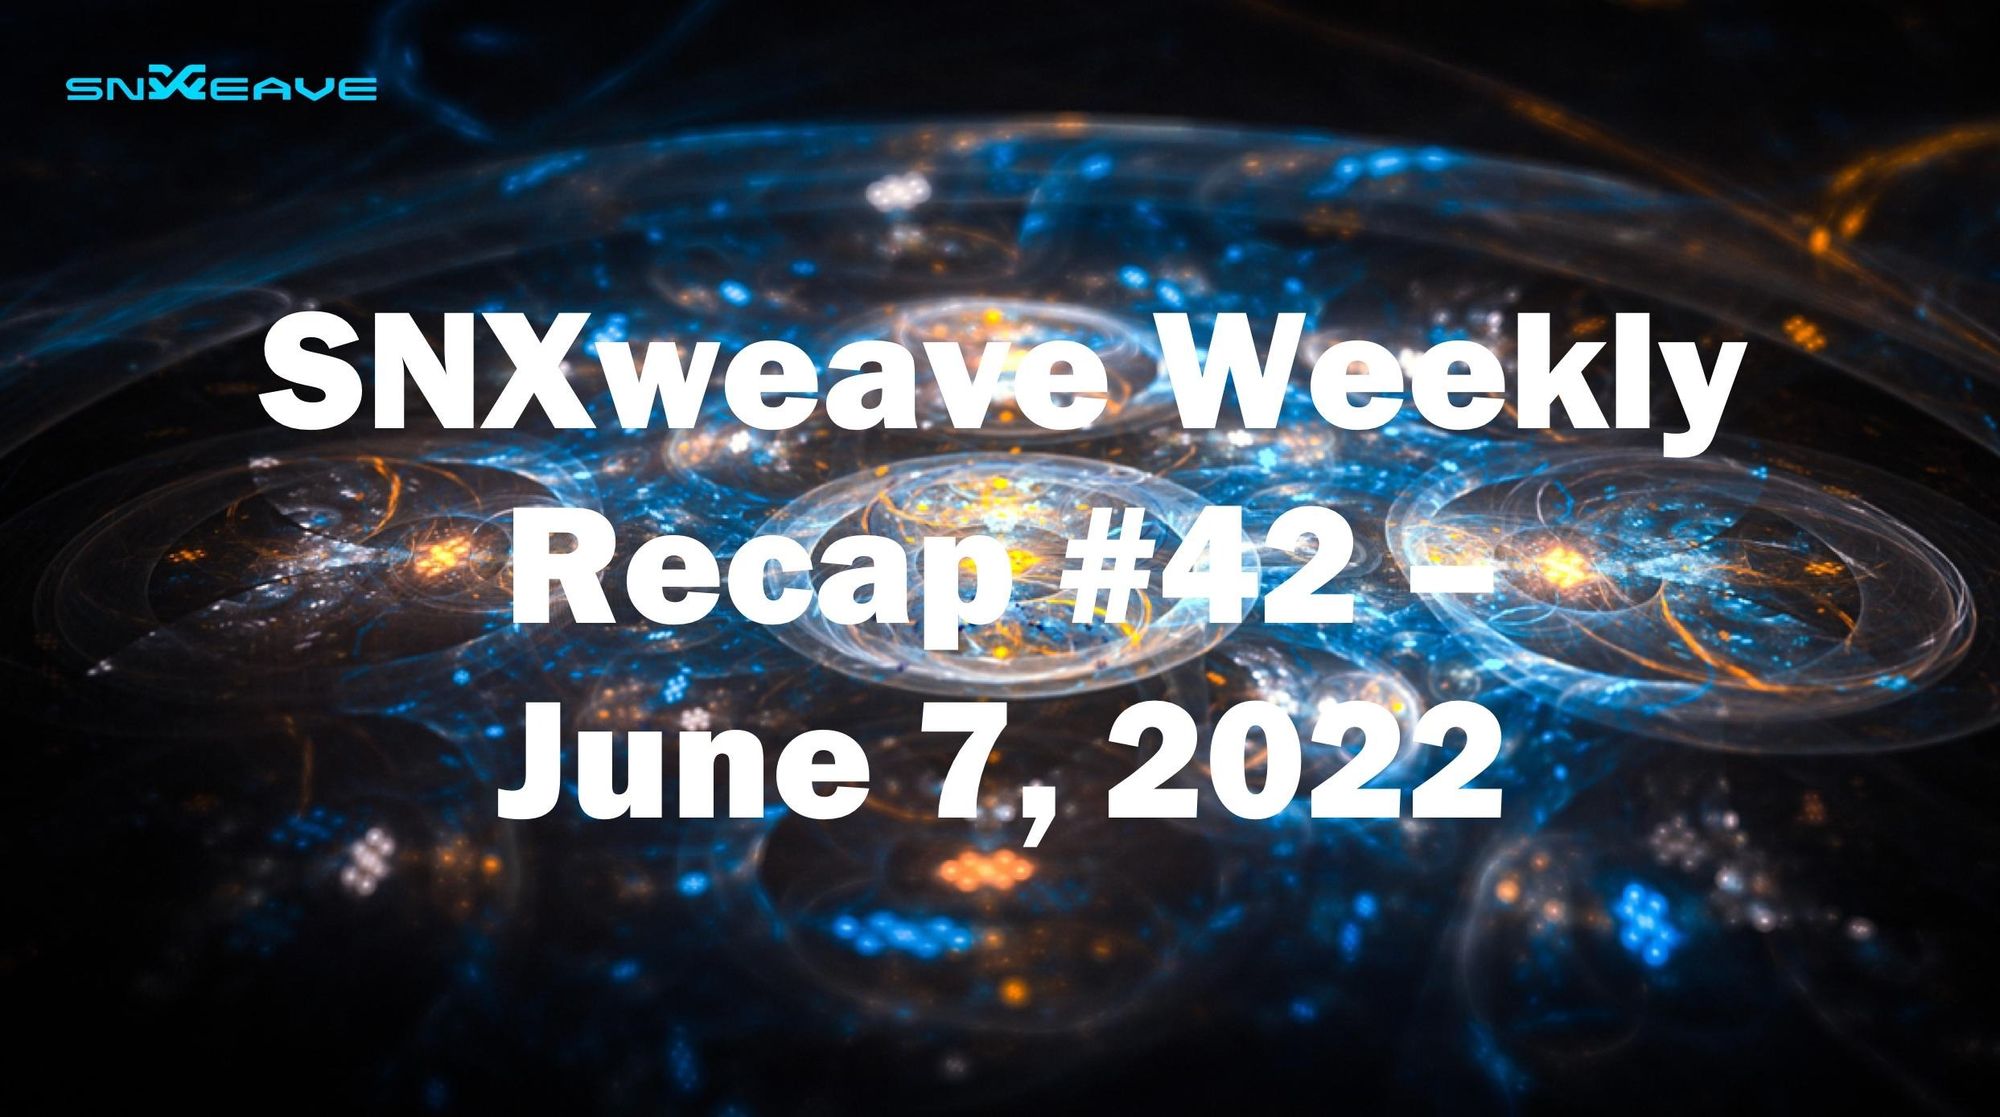 SNXweave Weekly Recap 42